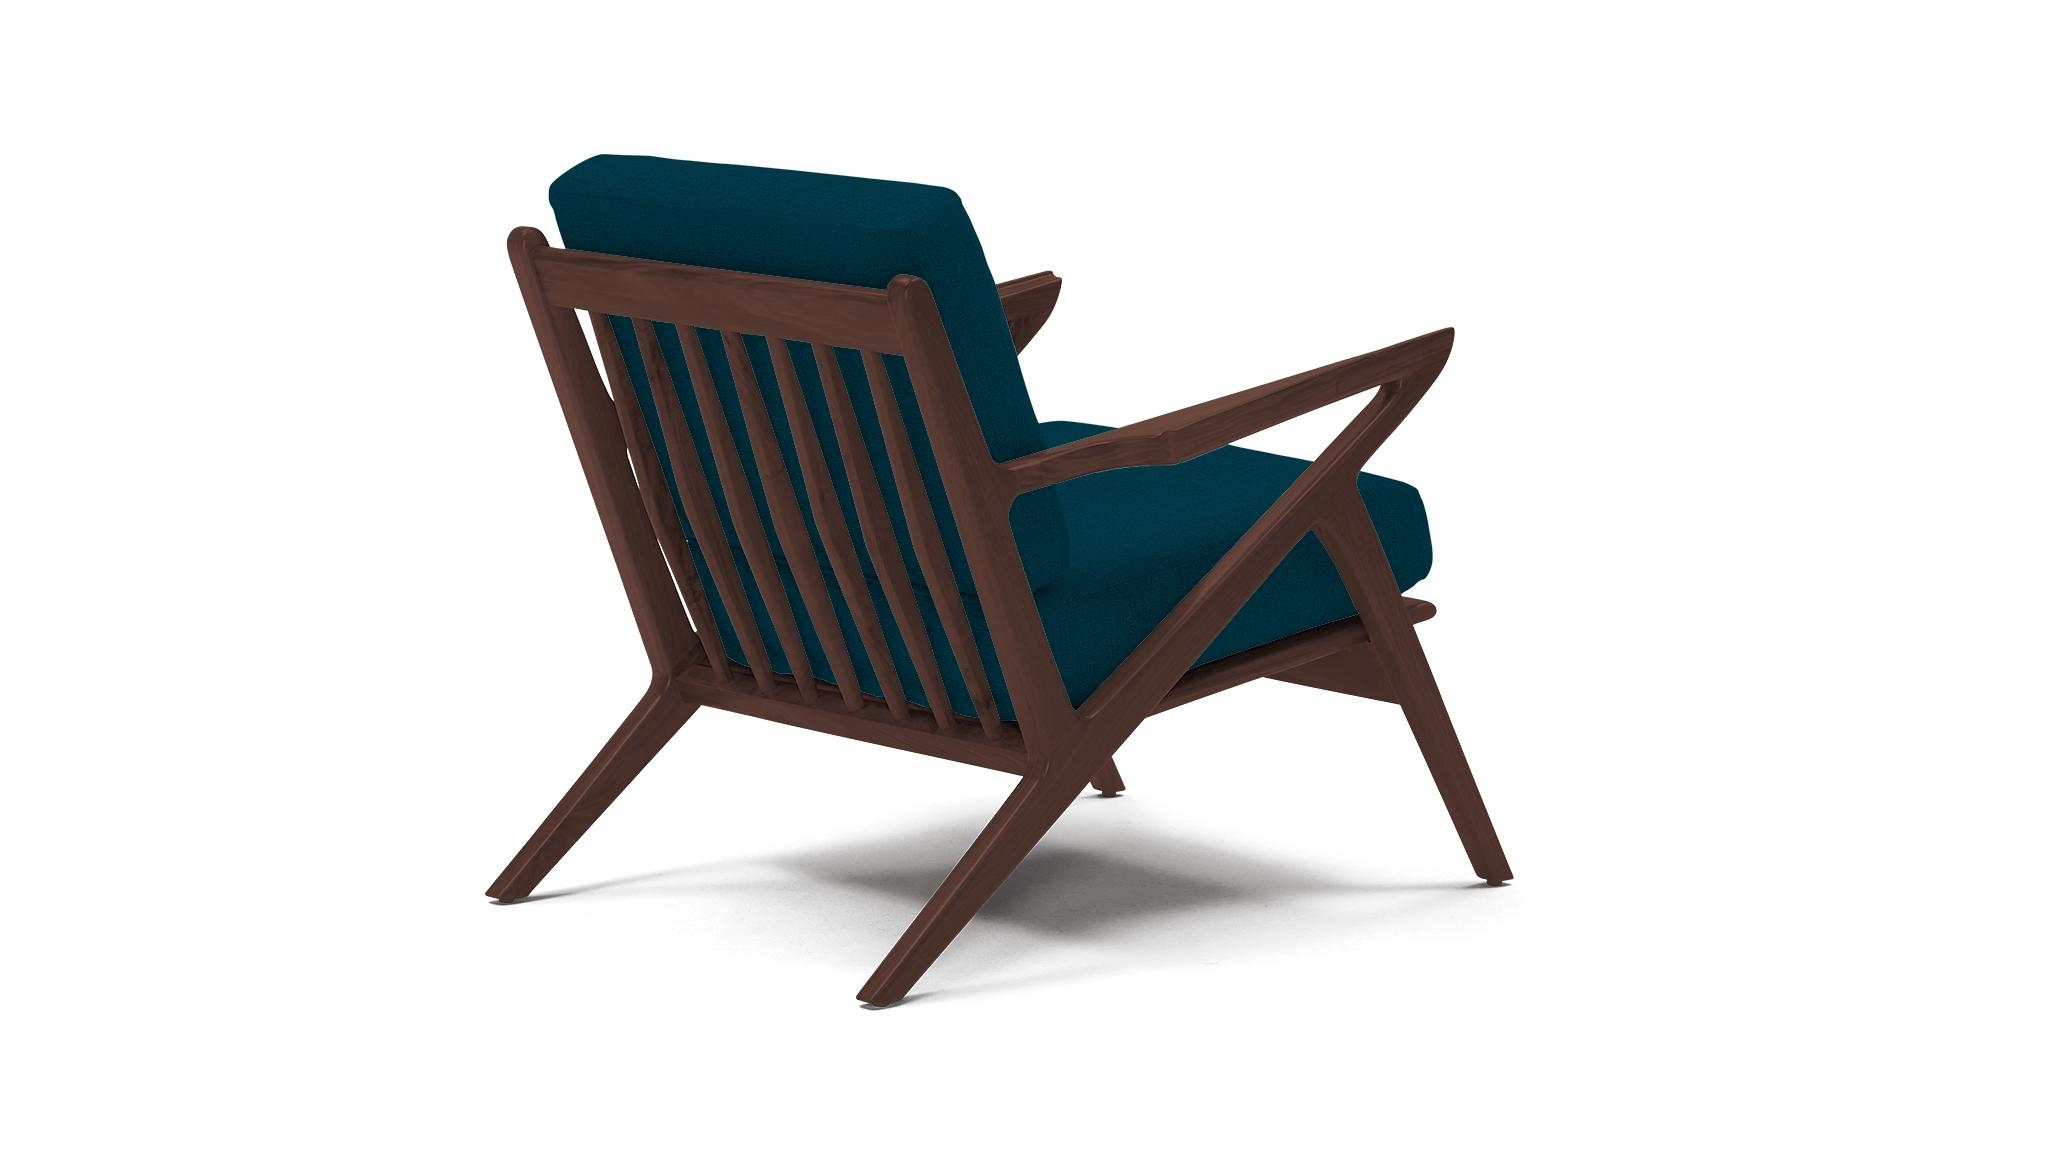 Blue Soto Mid Century Modern Concave Arm Chair - Key Largo Zenith Teal - Walnut - Image 3